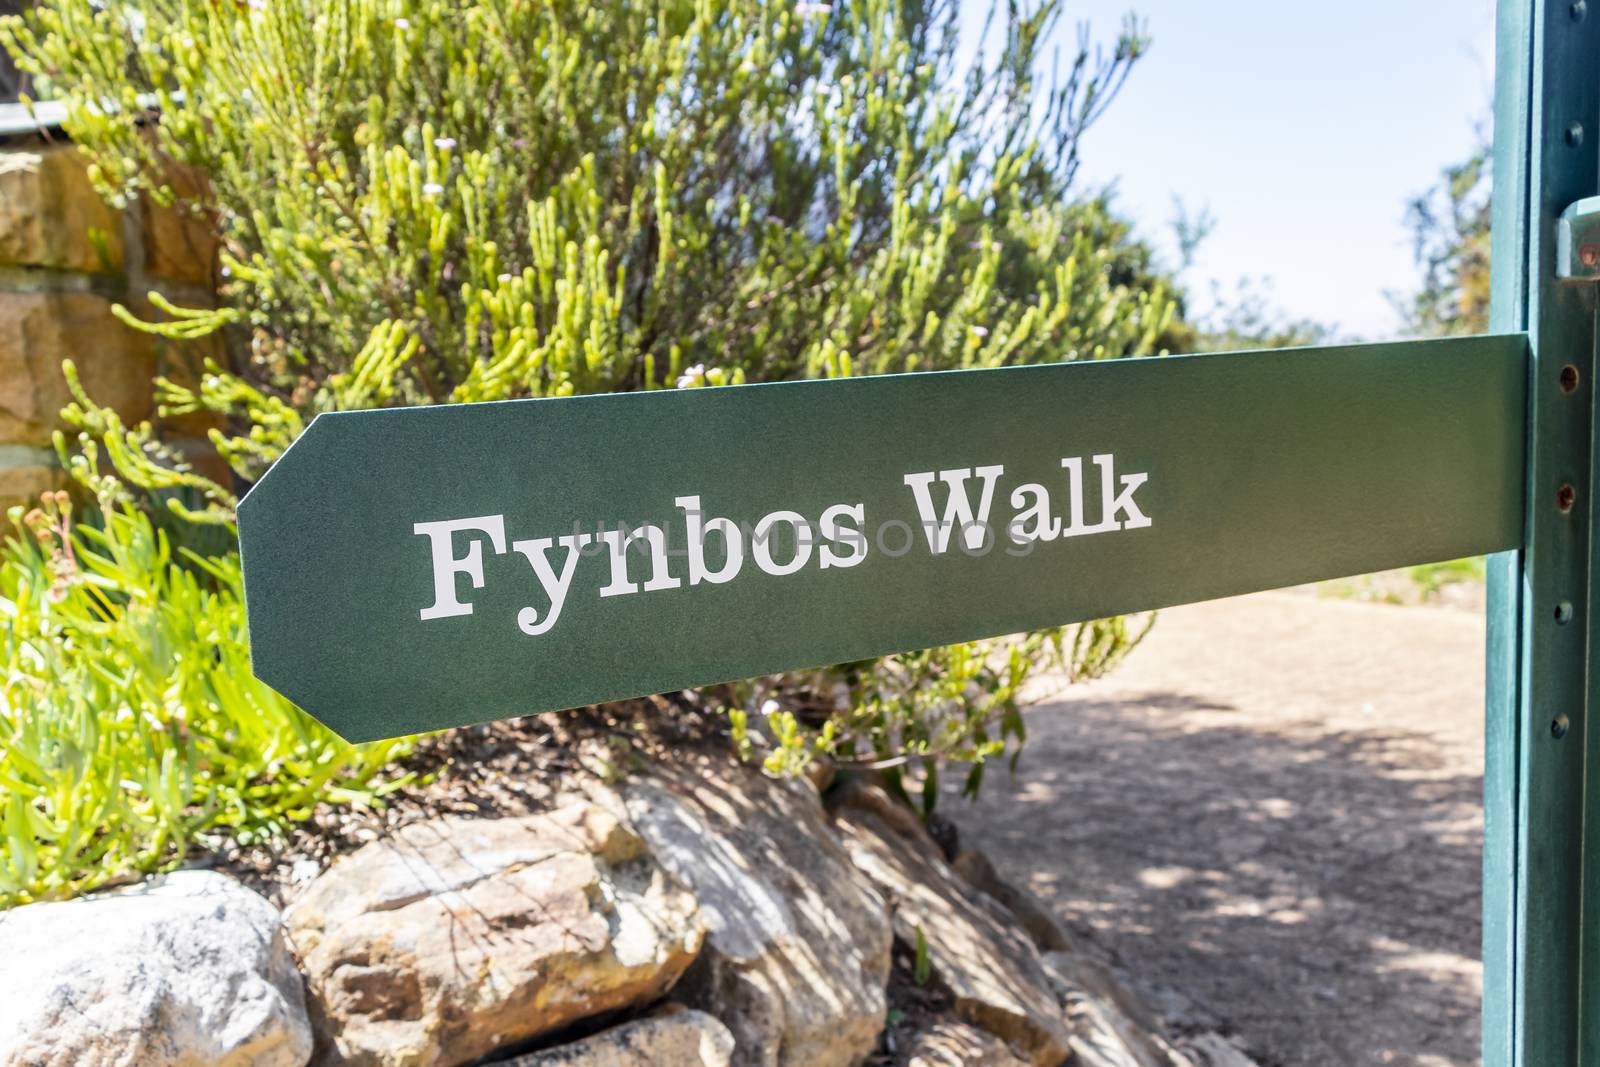 Fynbos Walk green turquoise sign in Kirstenbosch, Cape Town, South Africa.